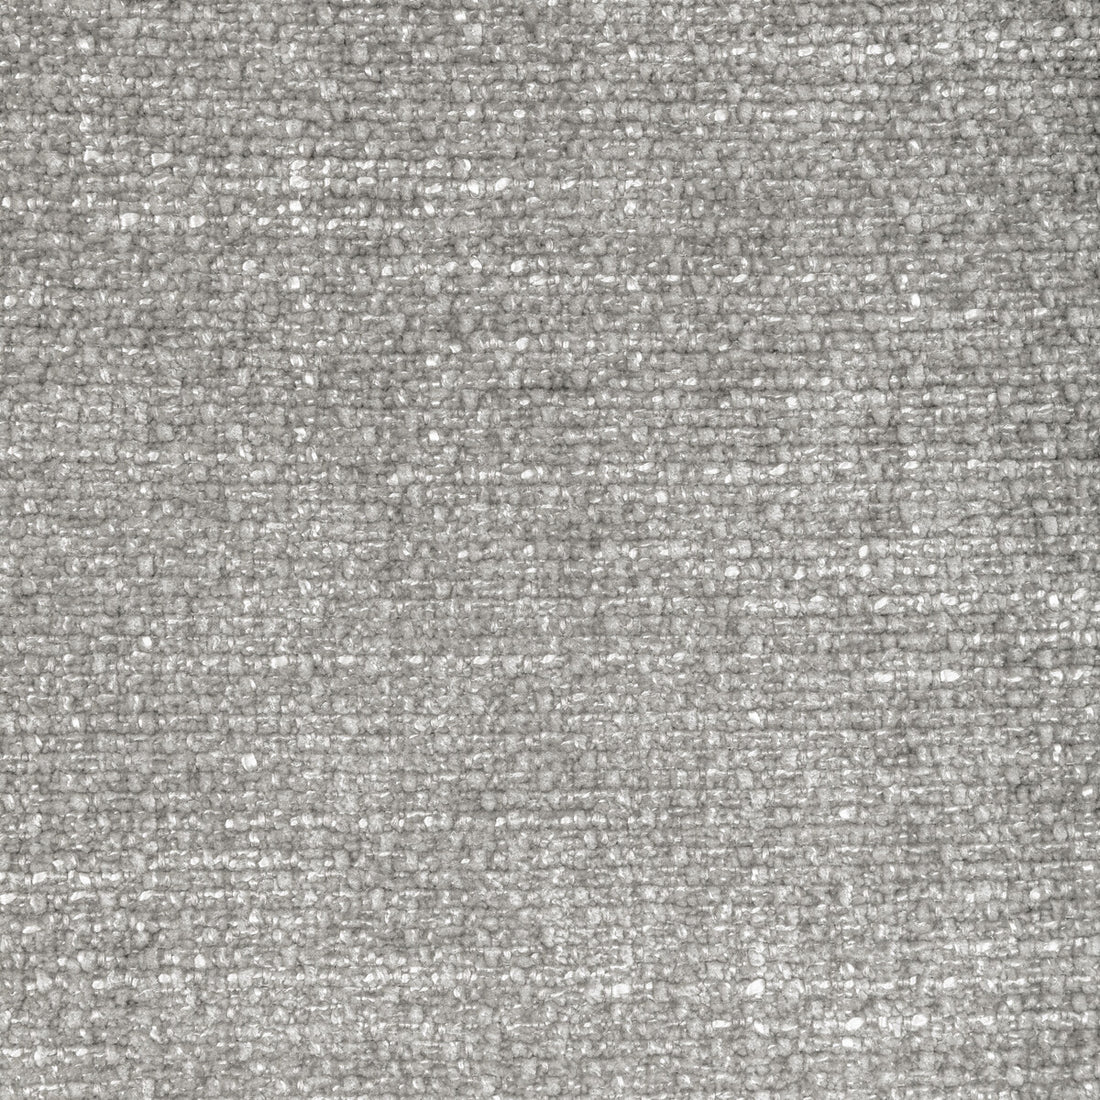 Kravet Smart fabric in 36578-11 color - pattern 36578.11.0 - by Kravet Smart in the Performance Kravetarmor collection